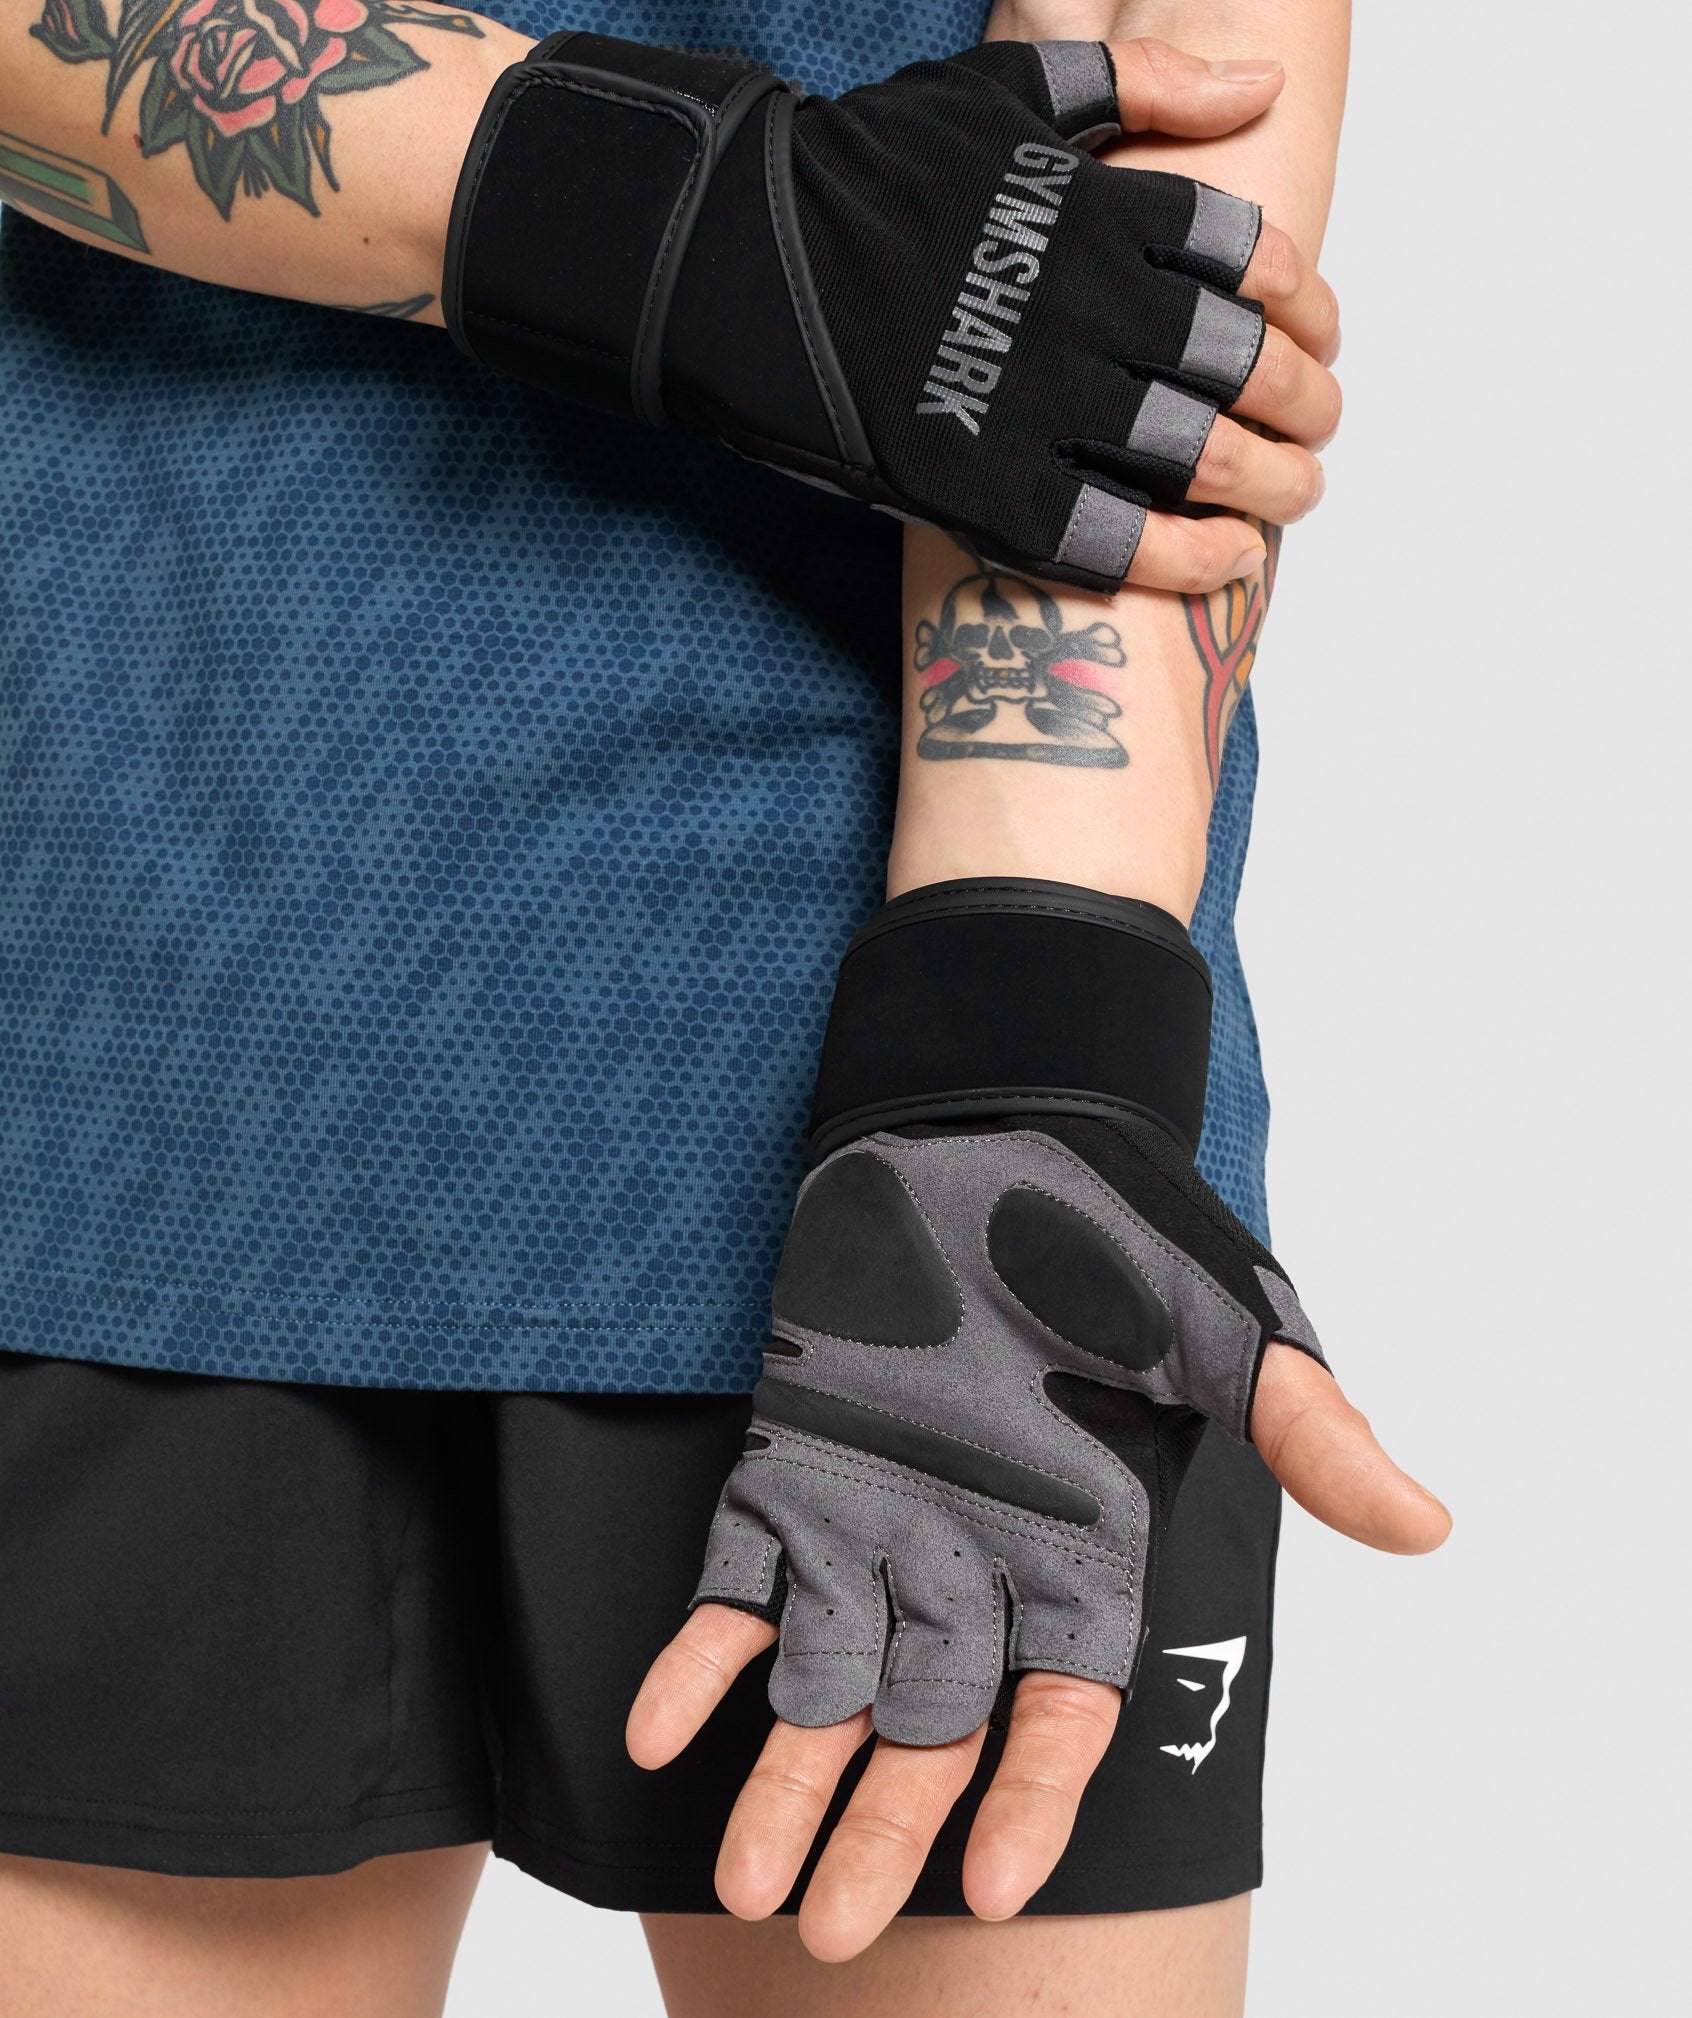 Gymshark Wrap Lifting Gloves - Black